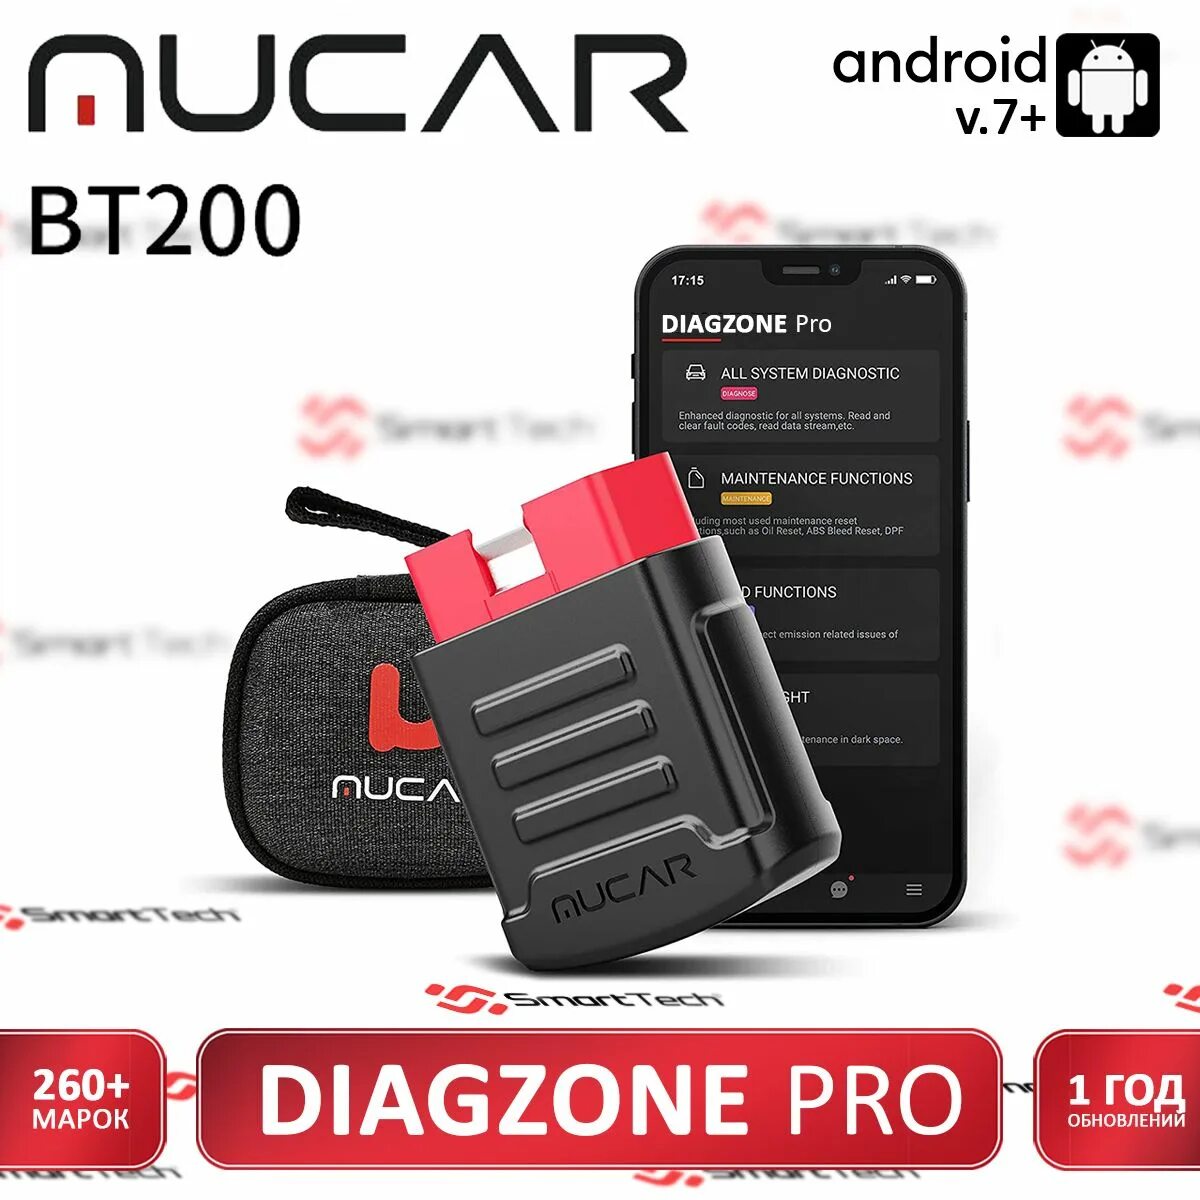 Сканер mucar bt200. Мультимарочный автосканер mucar bt200 от Launch. Mucar bt200 BT Diagnostic. Диагзоне лаунч.